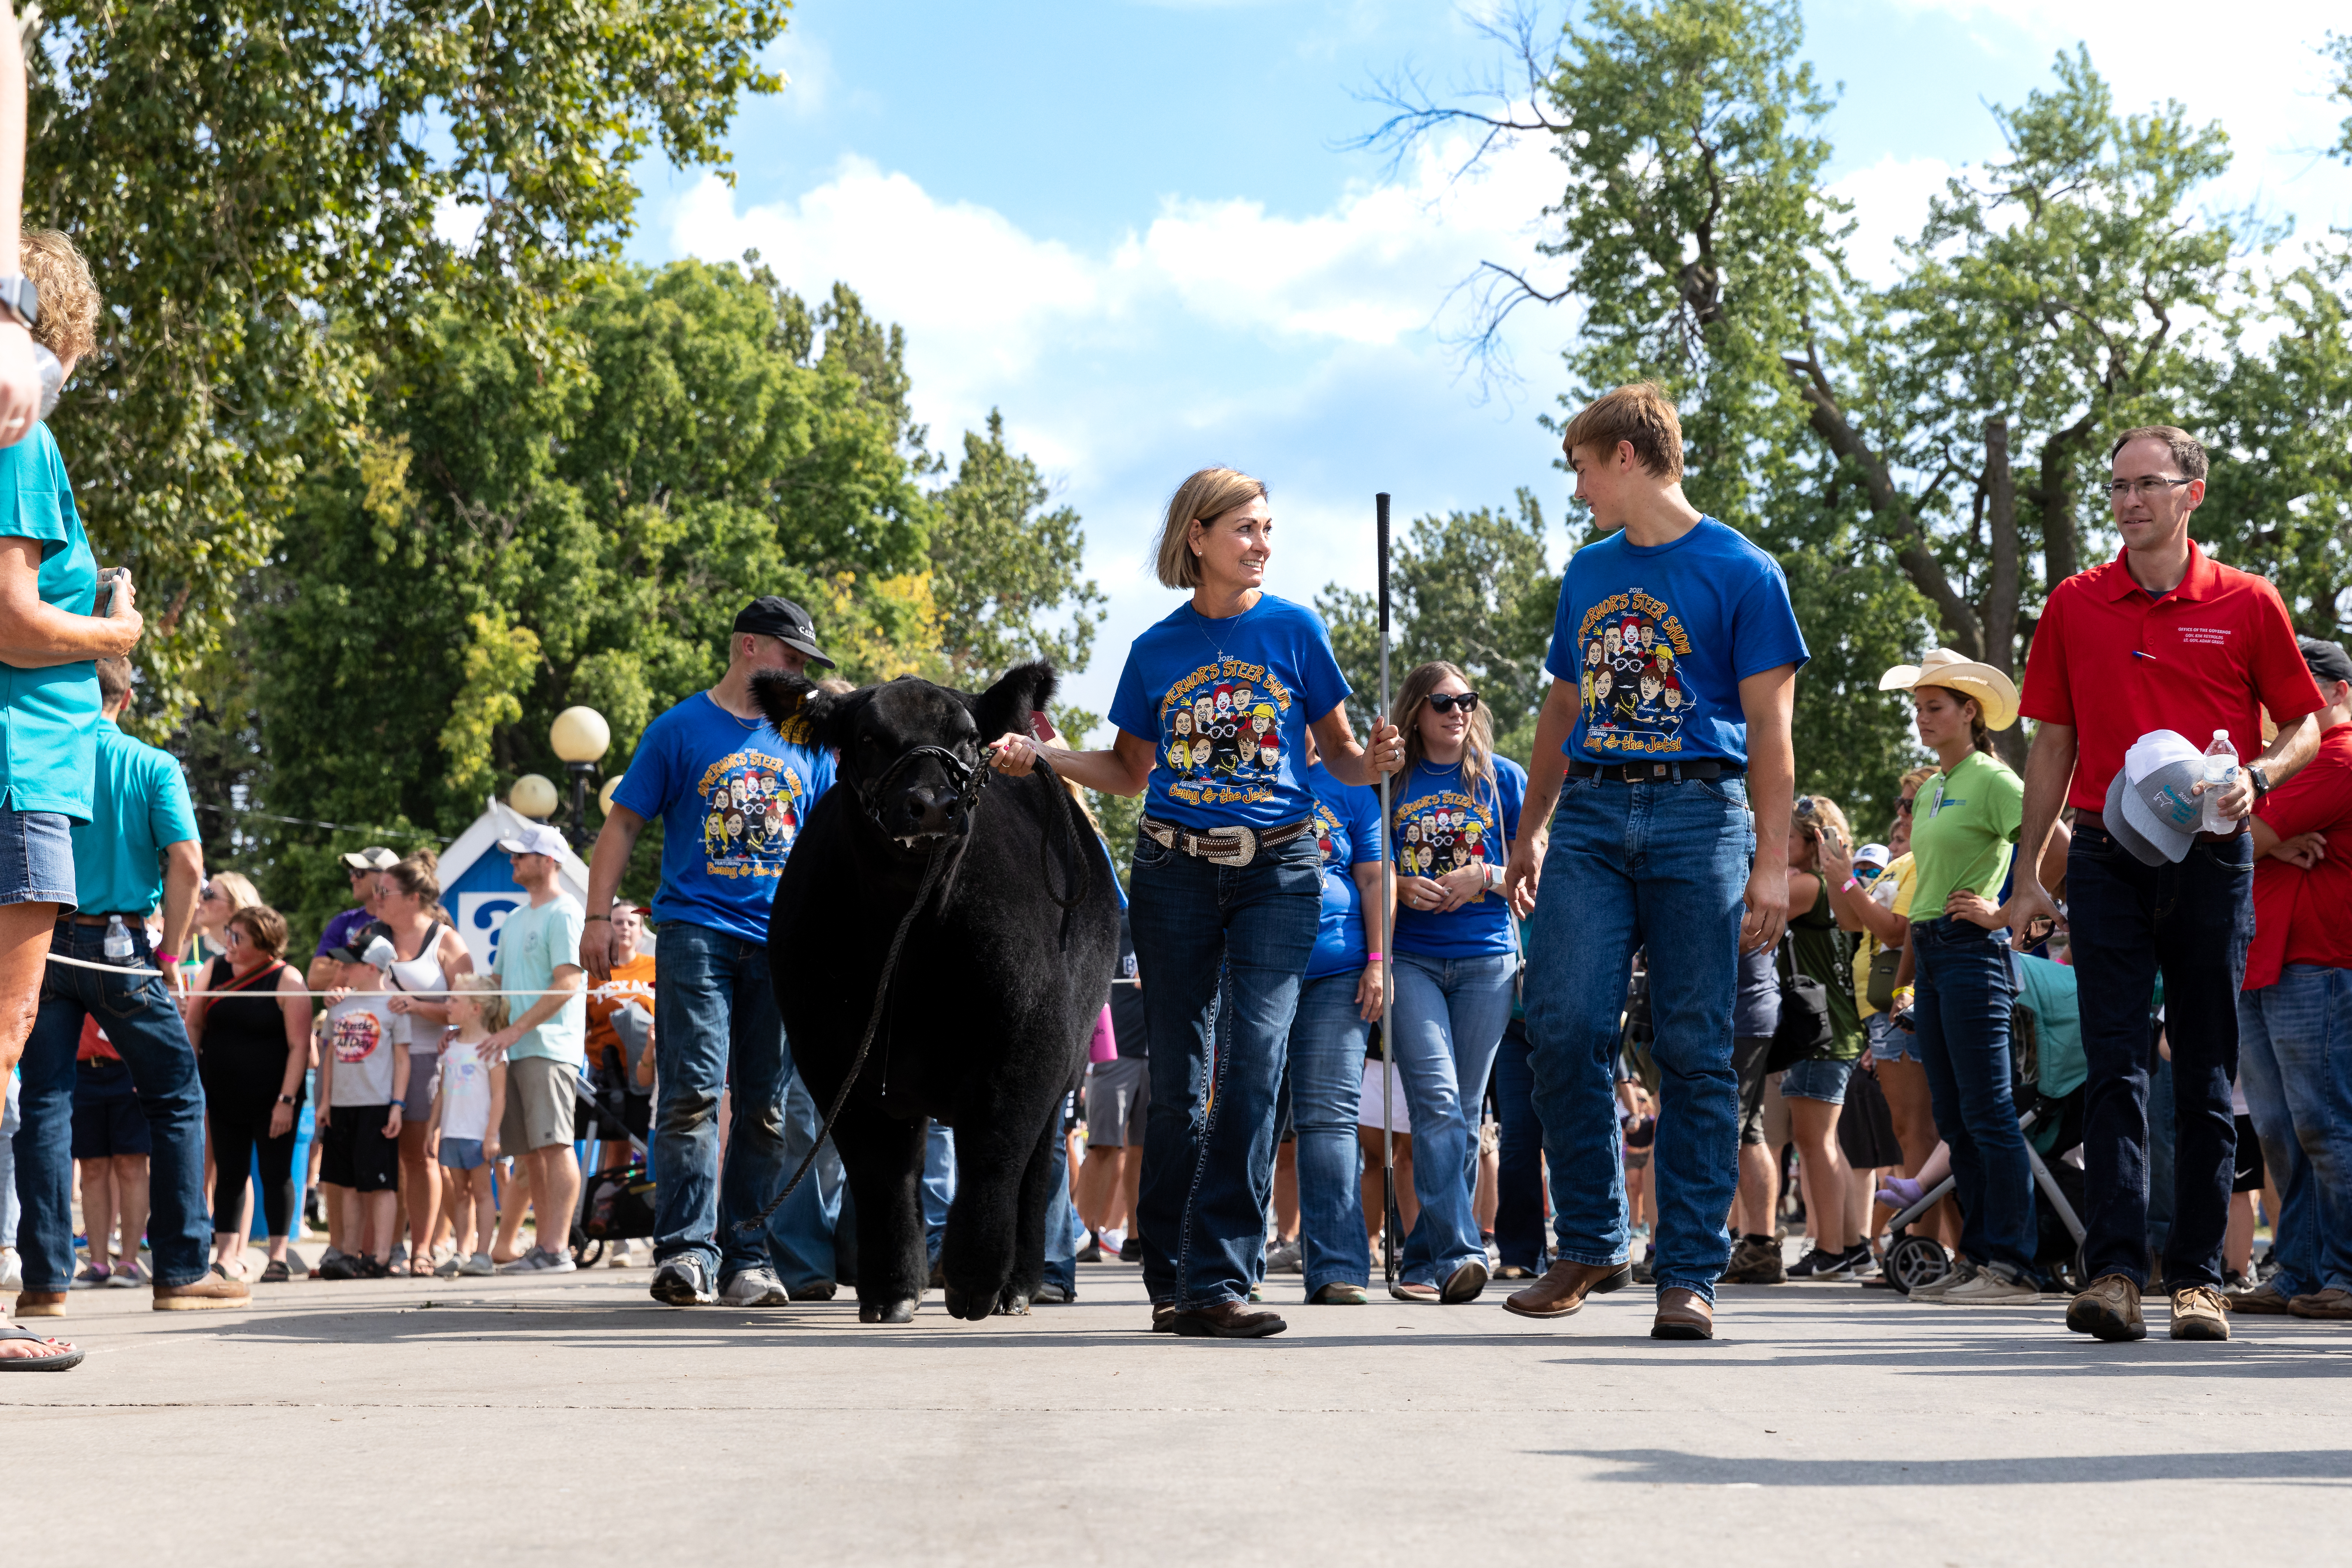 Iowa Governor's Charity Steer Show raises over $440,000 for Ronald McDonald House Charities of Iowa